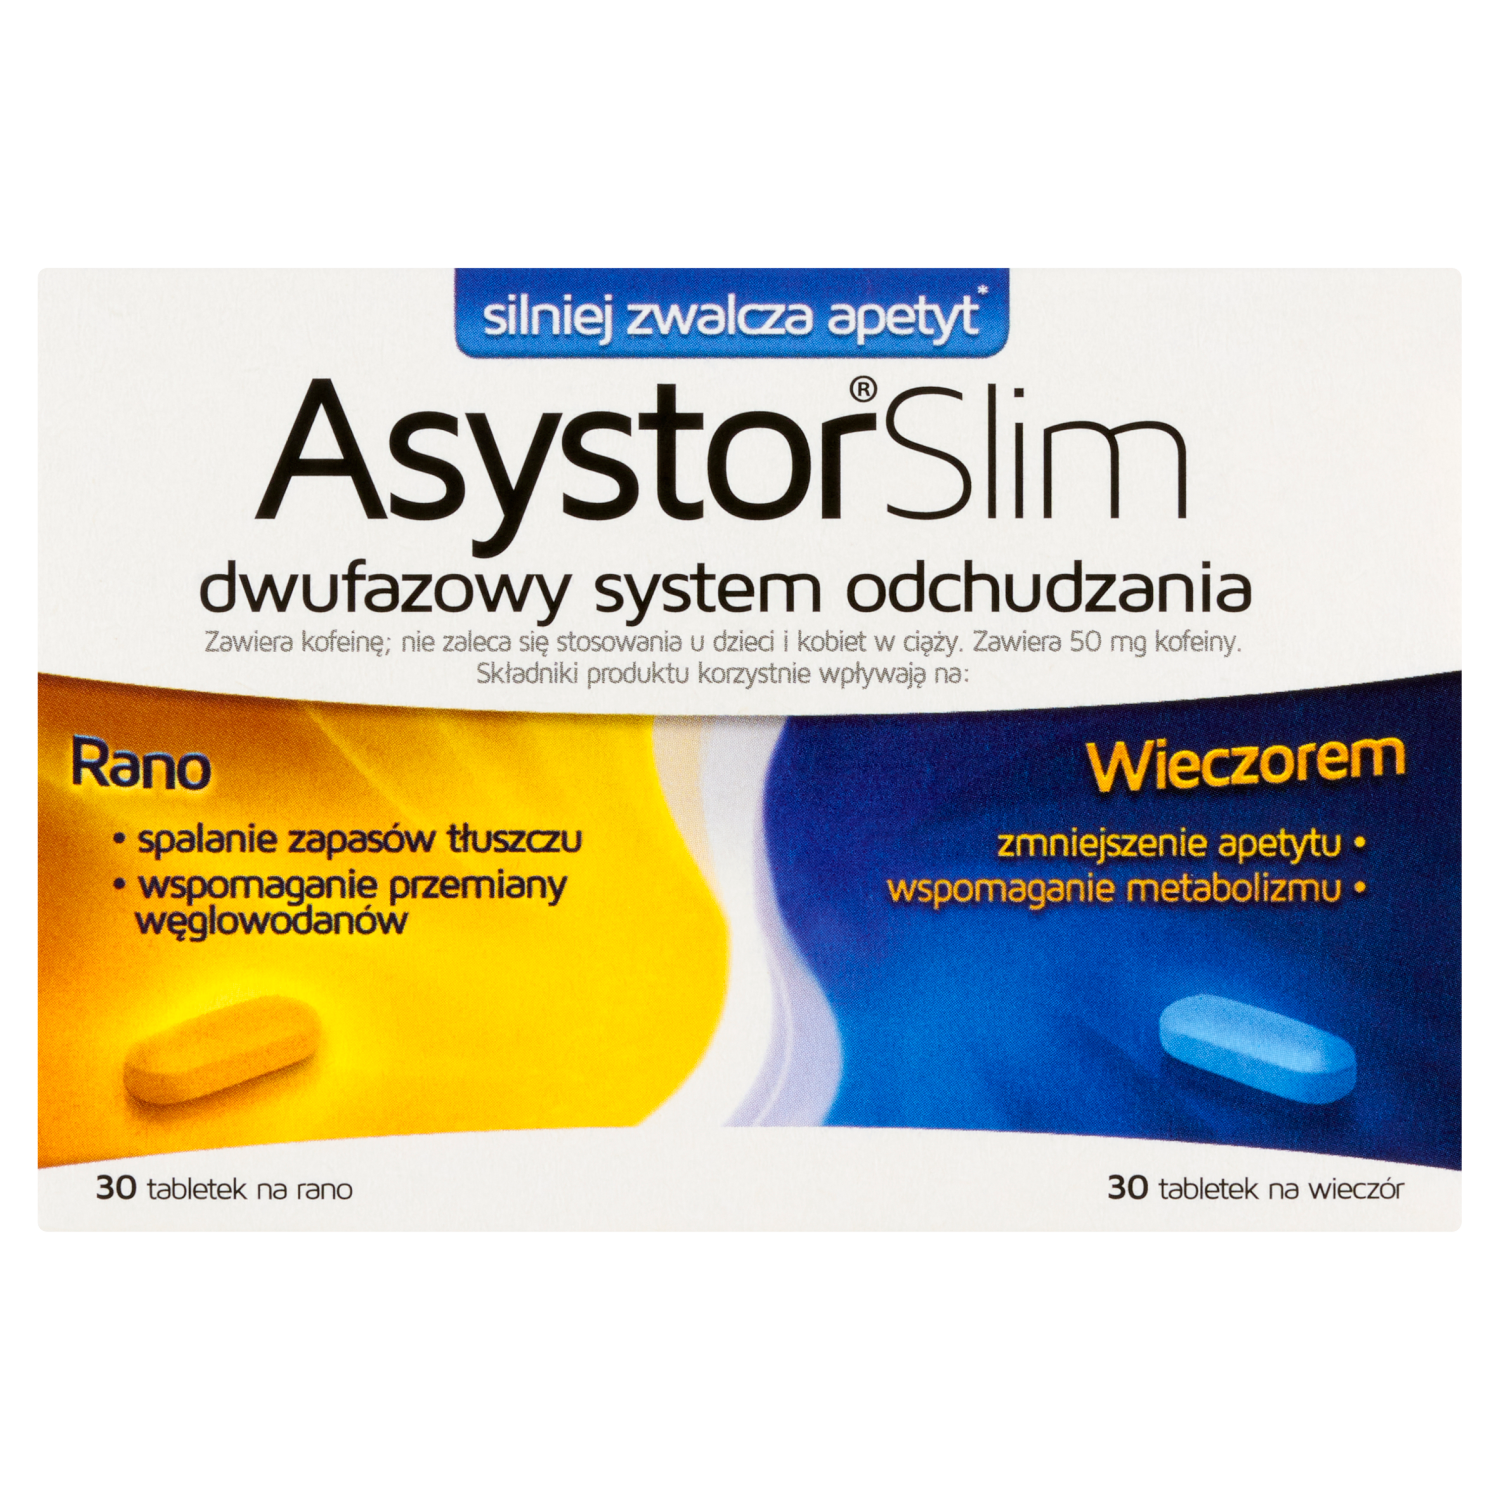 Asystor Slim suplement diety, 60 tabl./1 opak. | hebe.pl